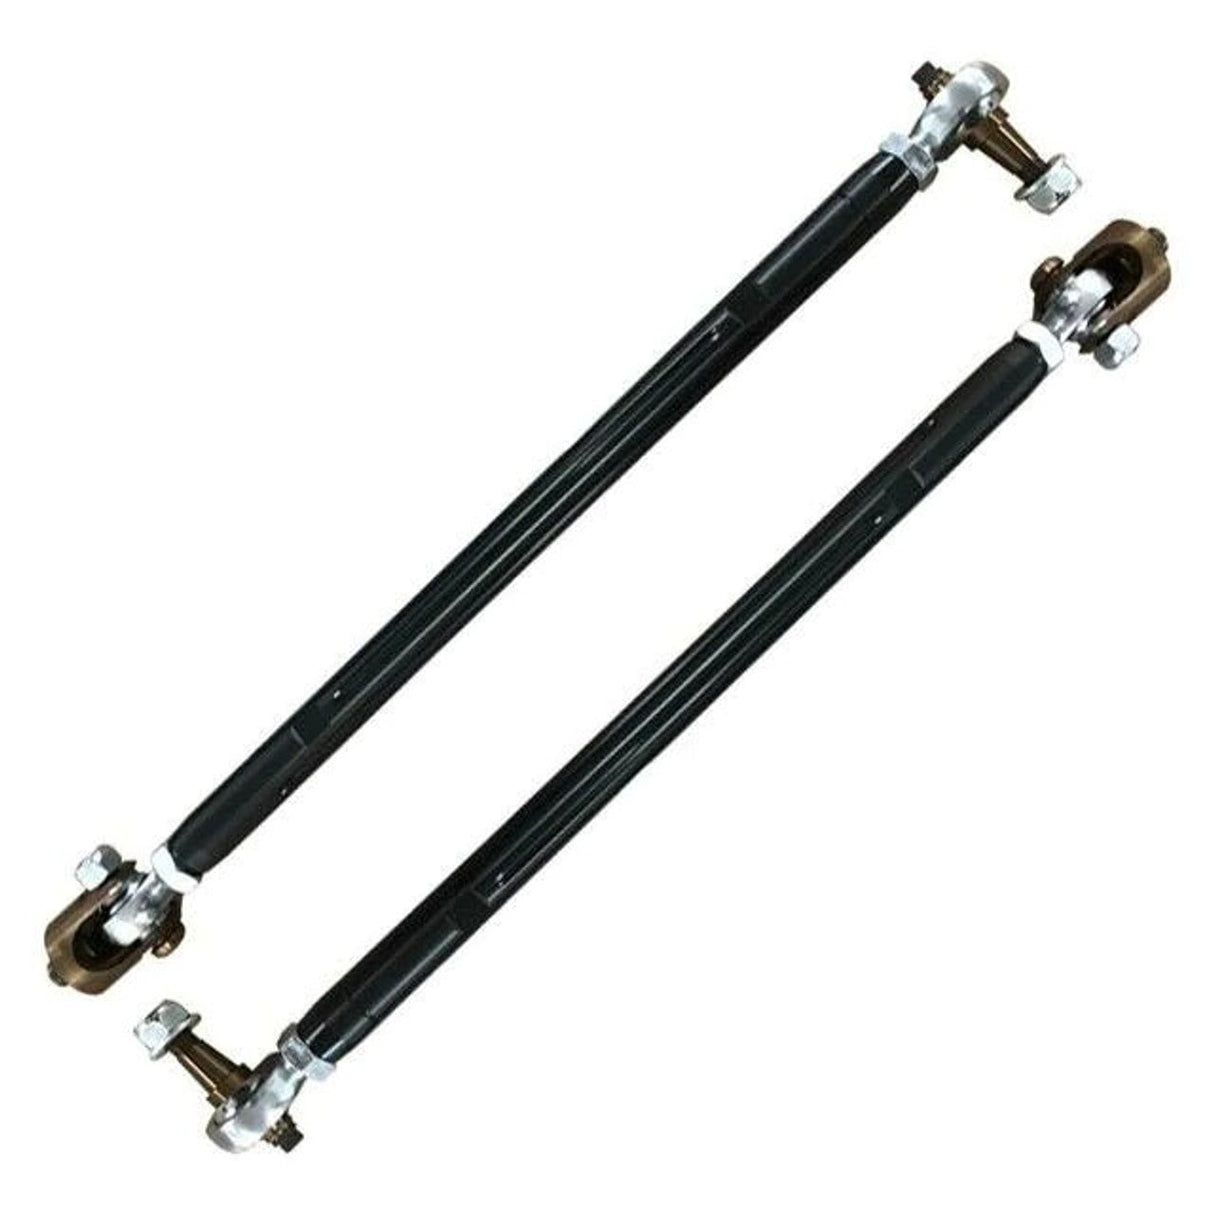 KRX Desert Series Tie Rods